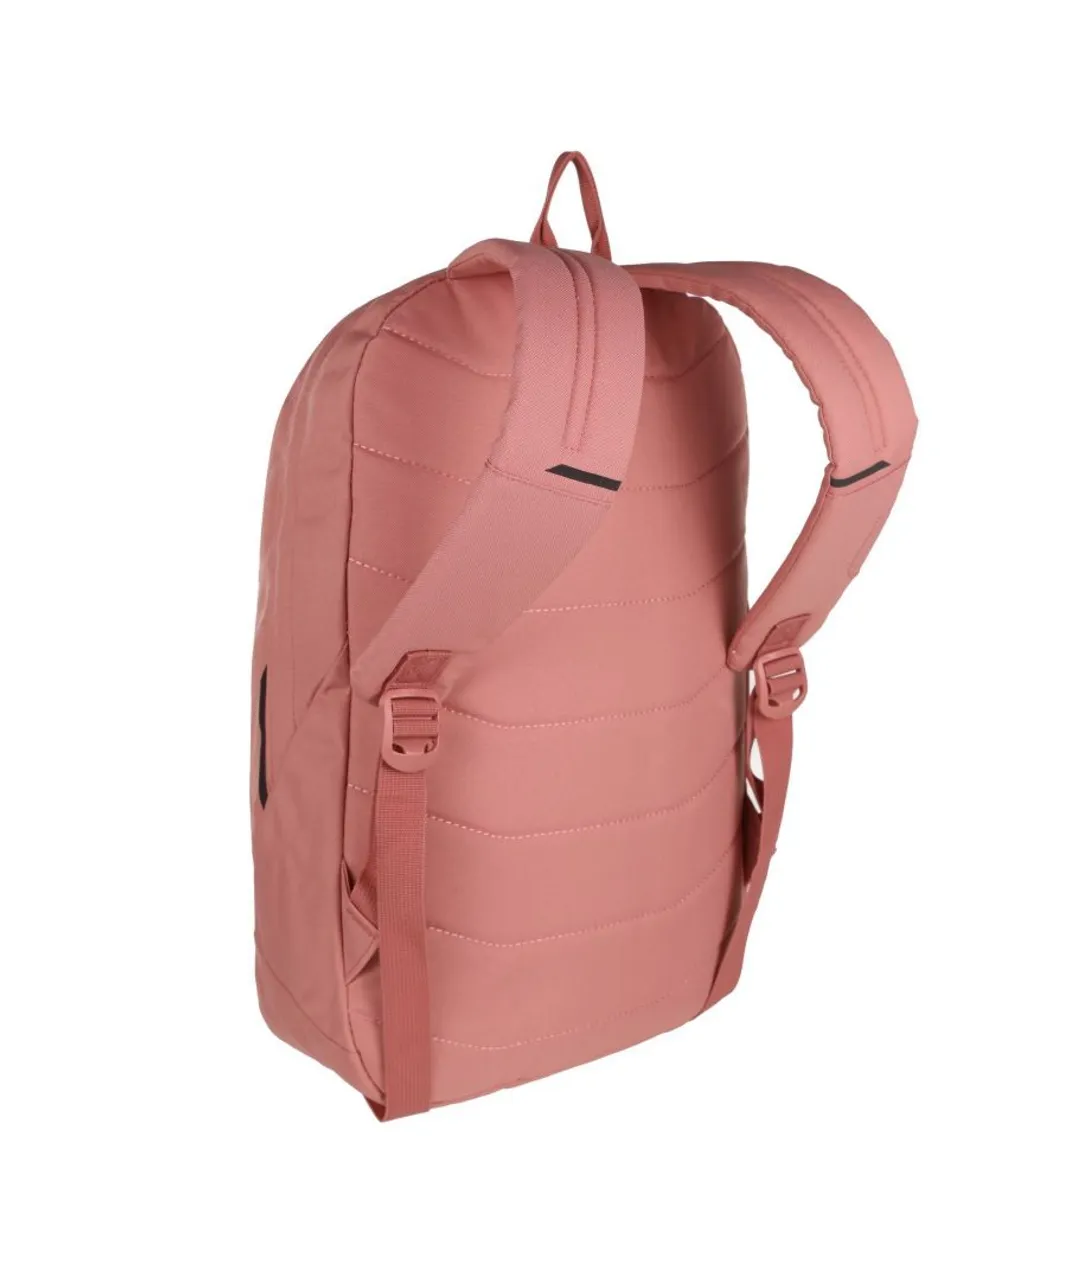 Regatta Unisex Backpack (Dusty Rose) - One Size